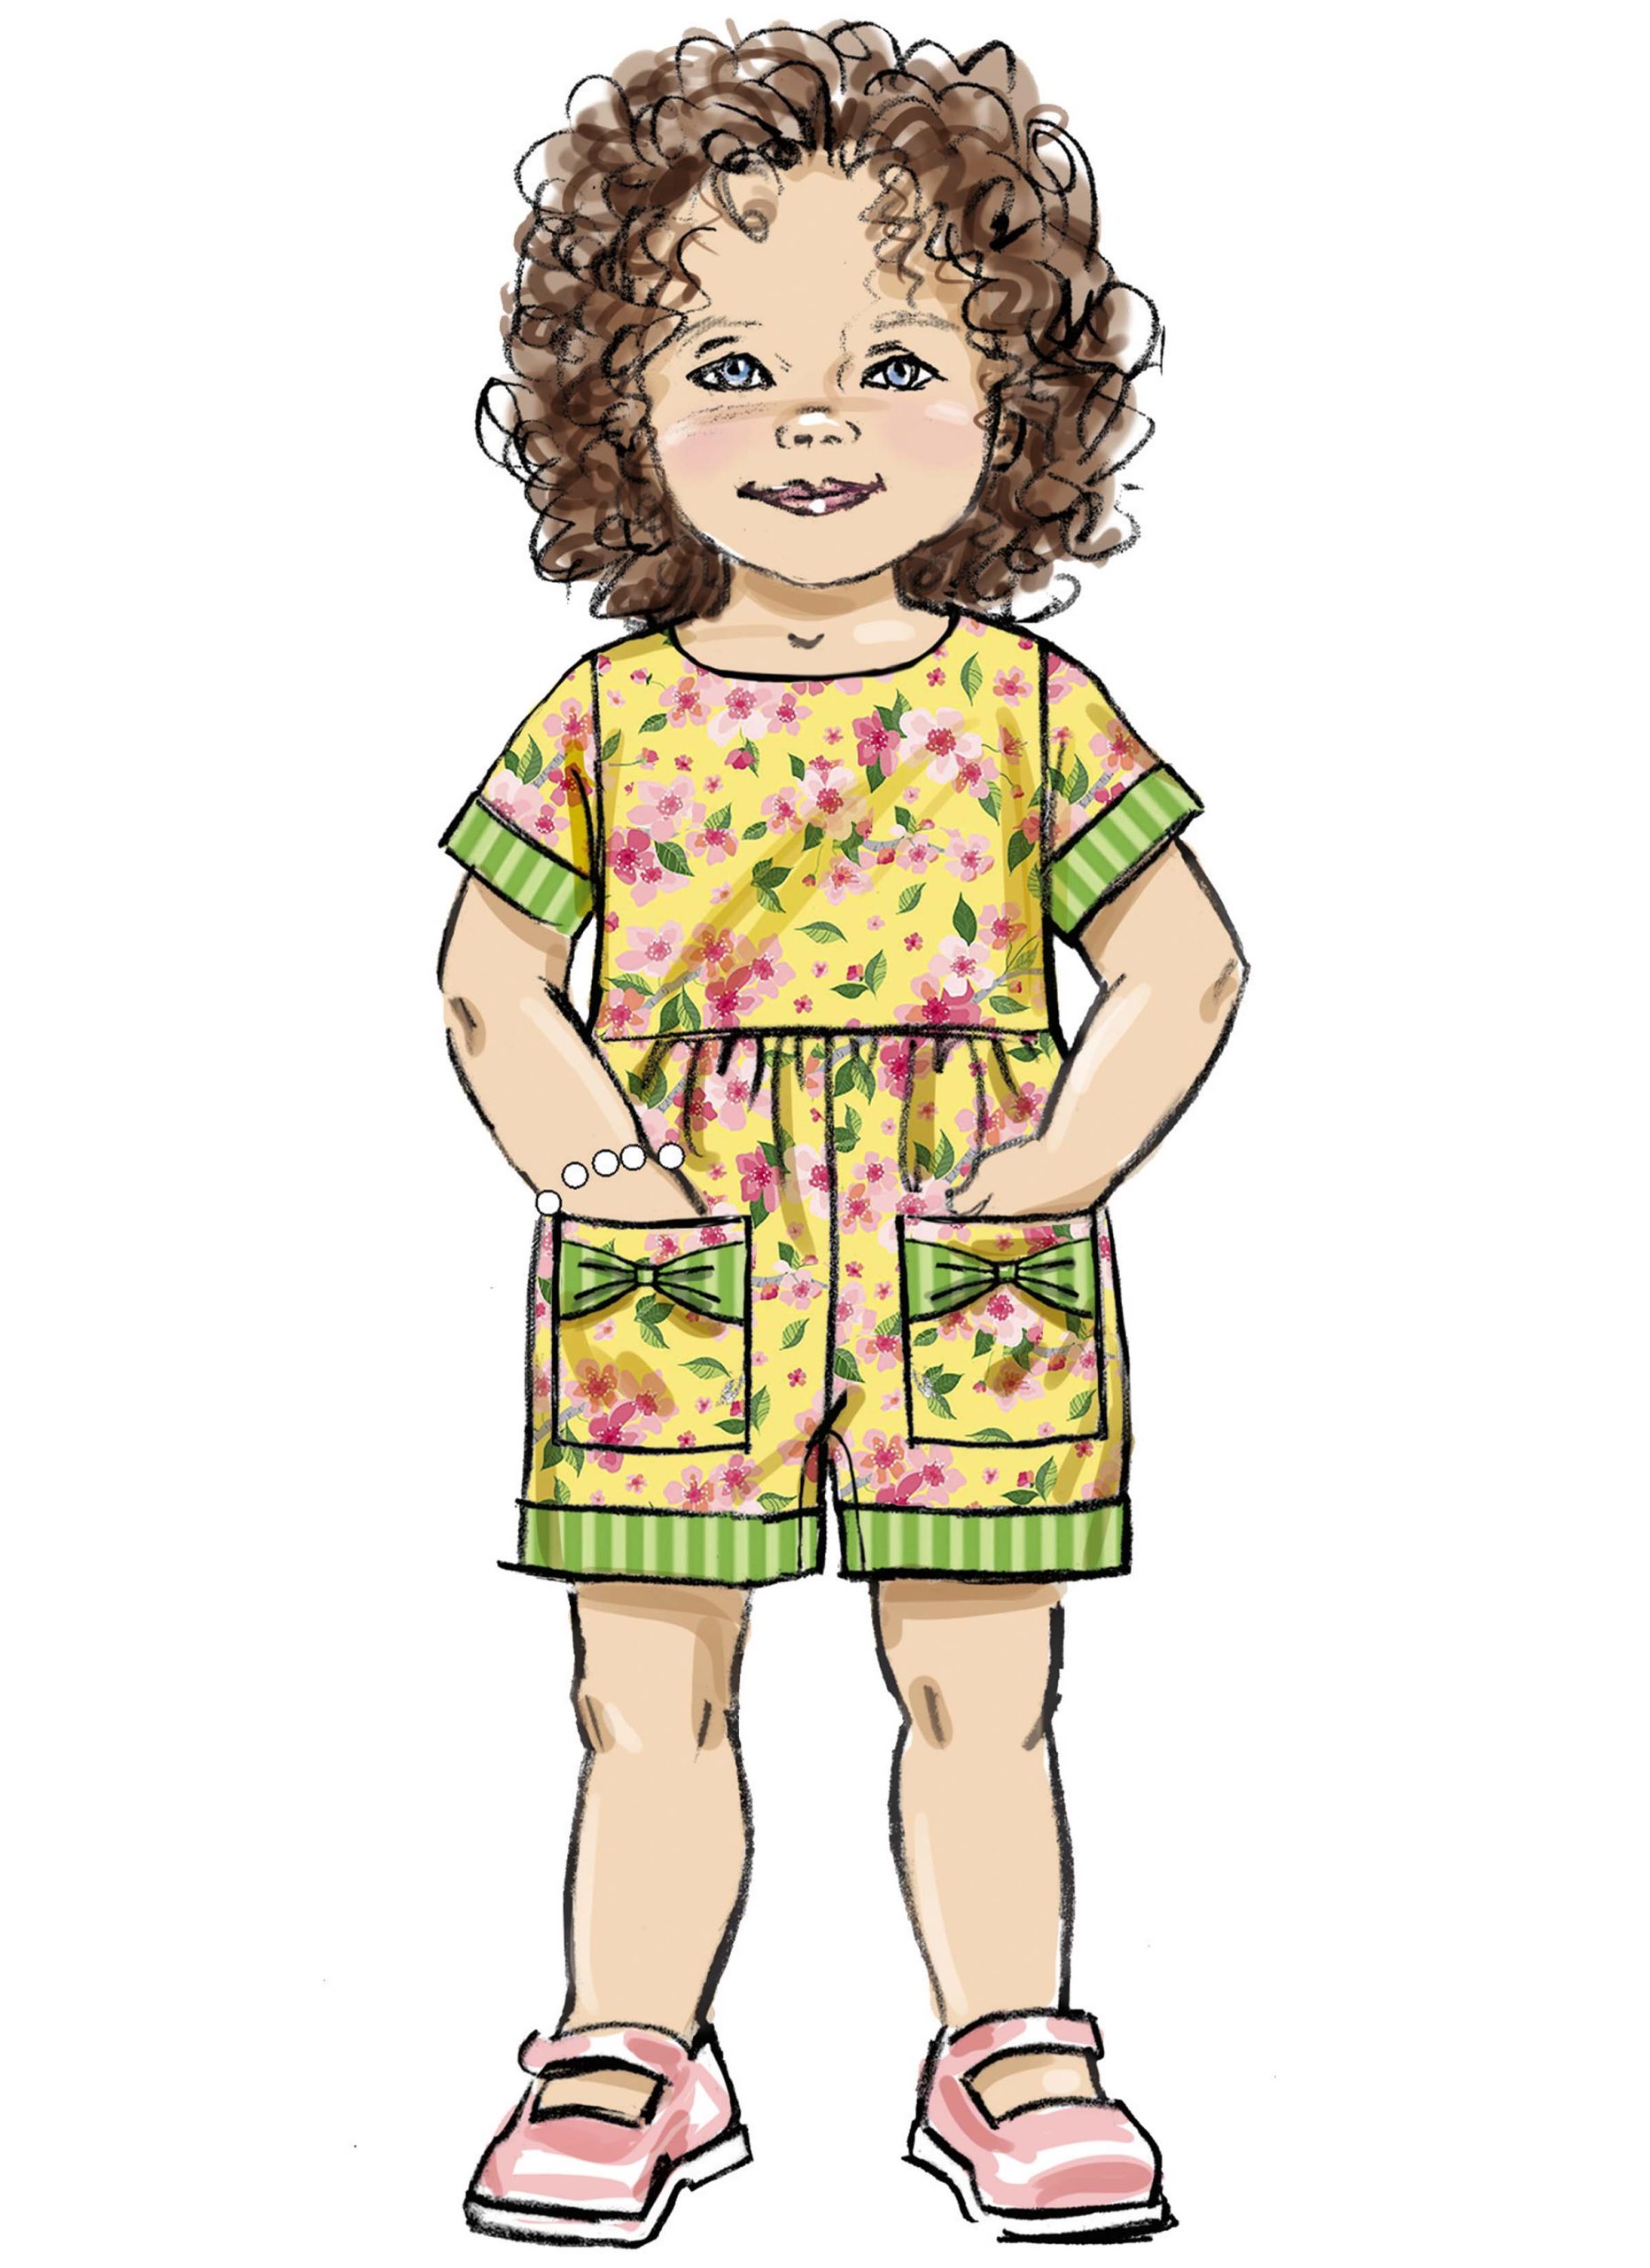 Butterick Baby/Child Dress & Romper B6987